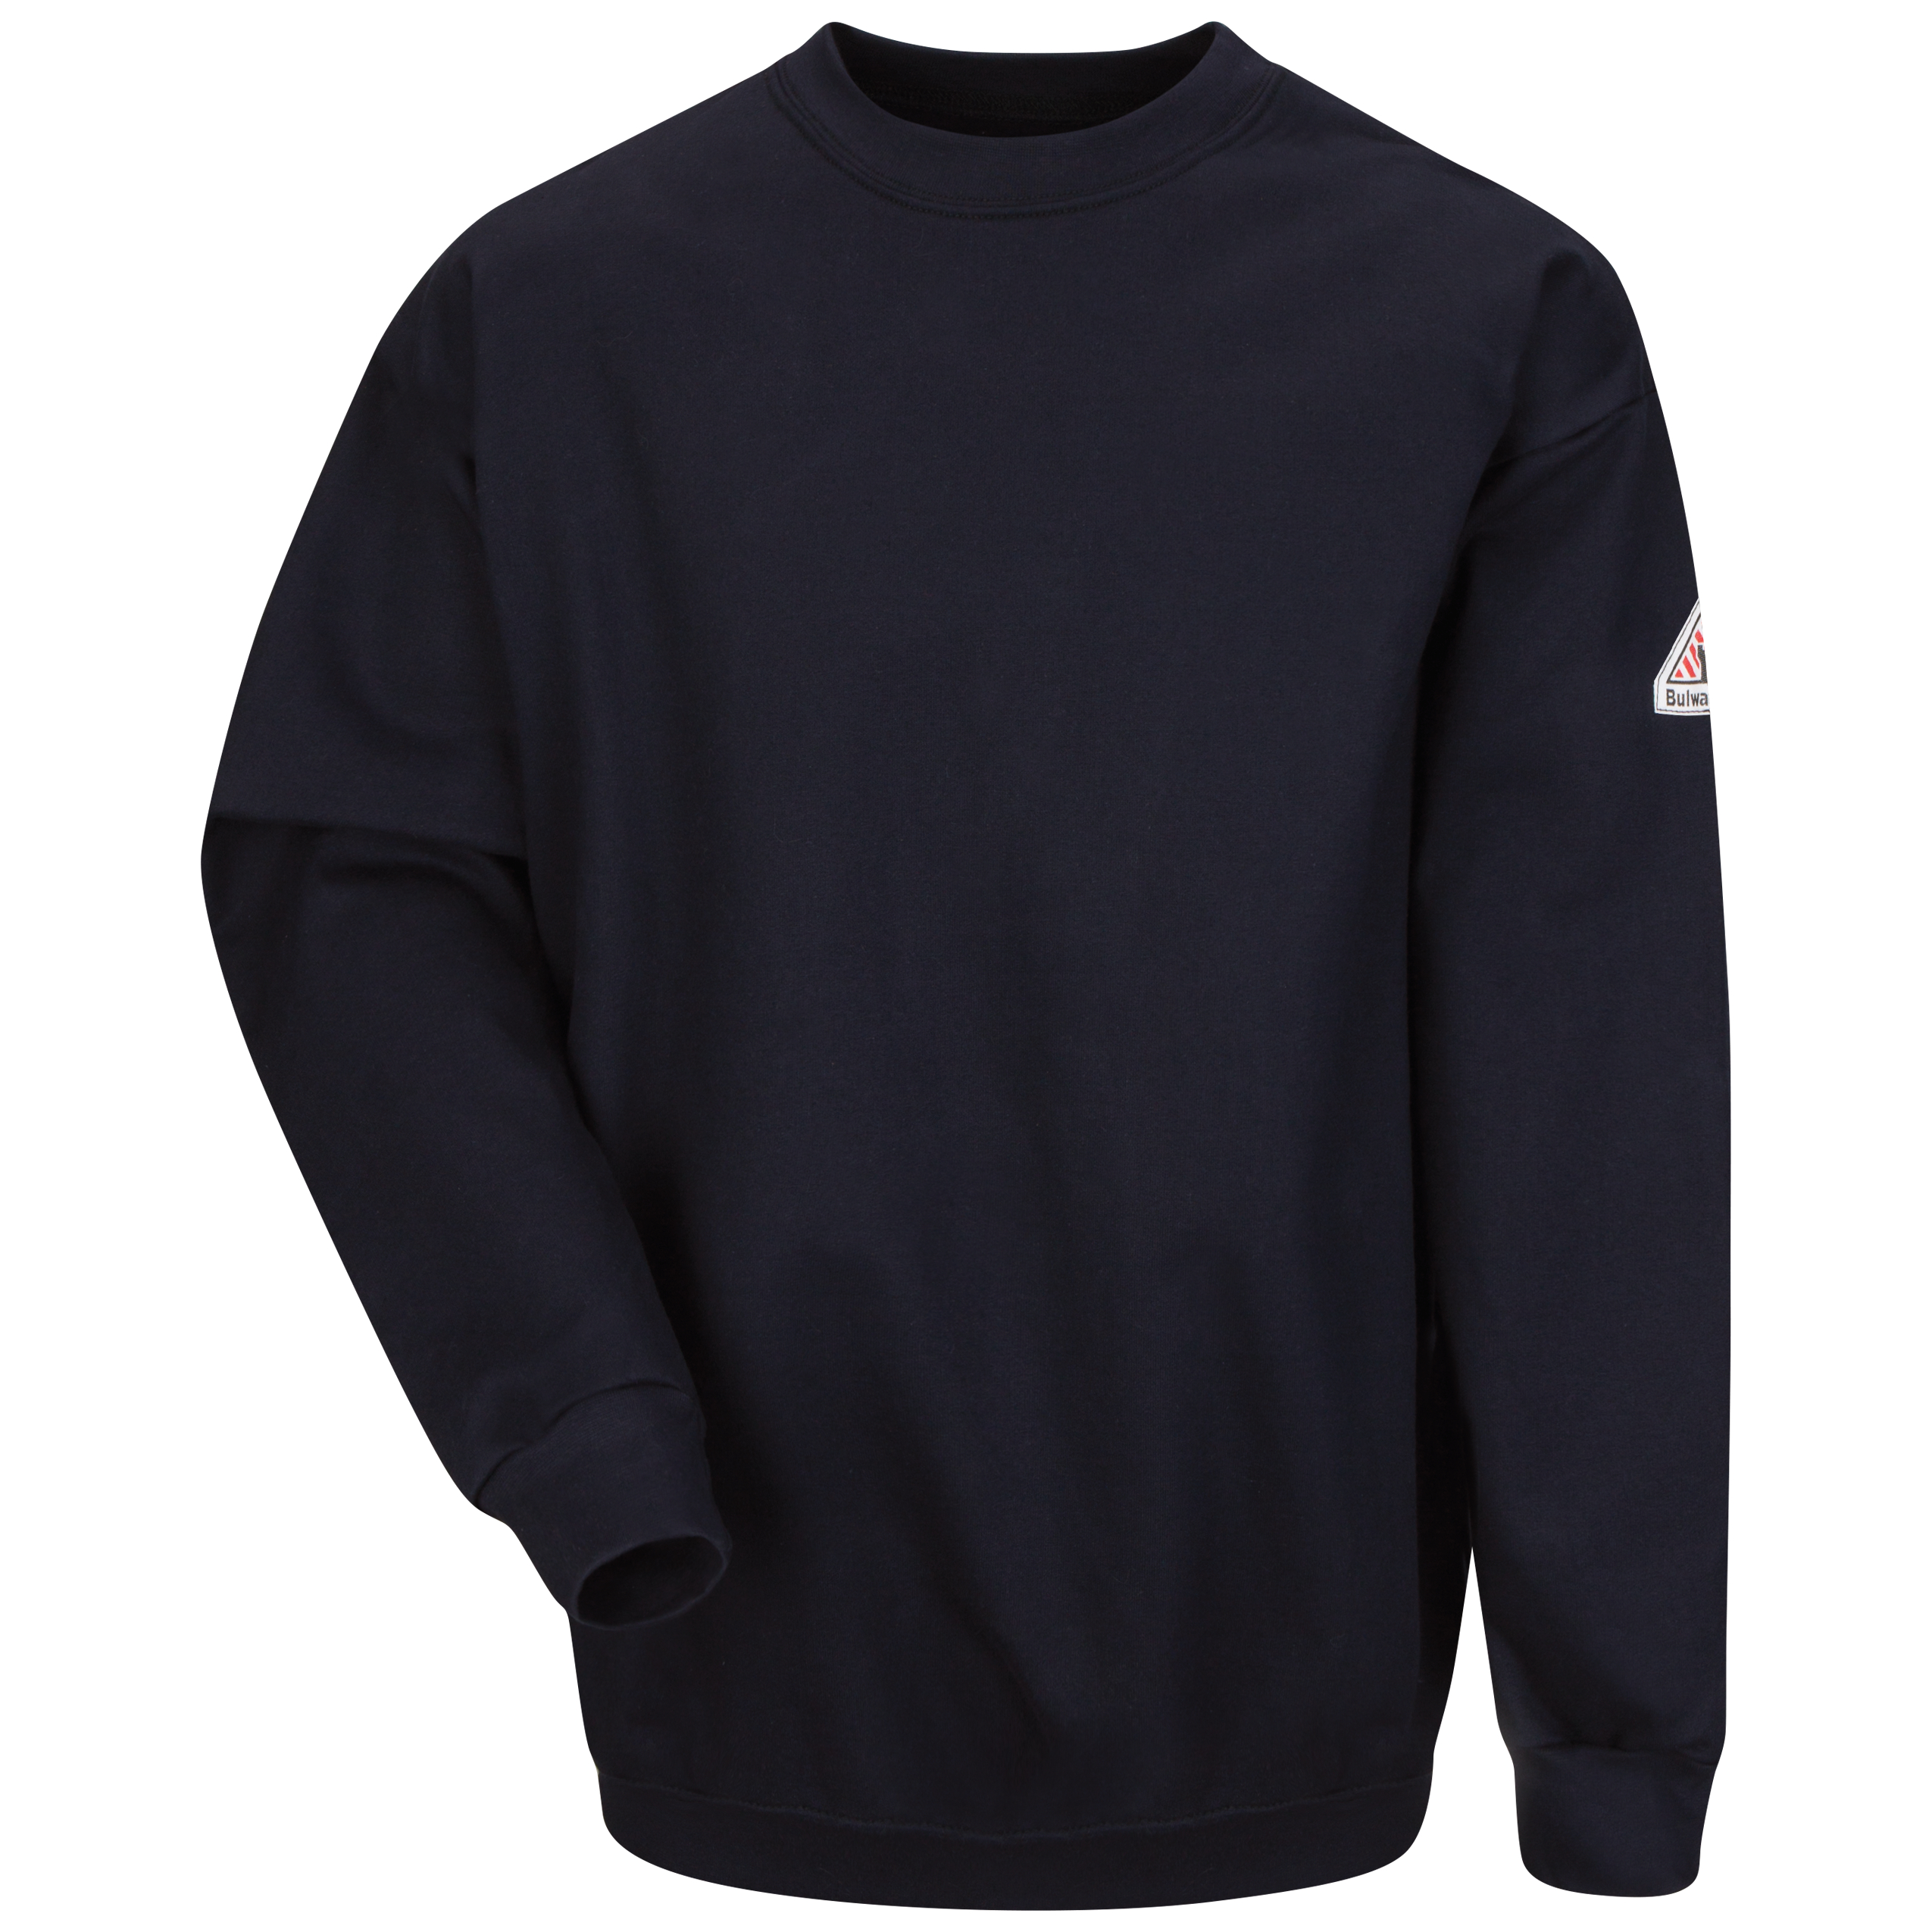 FR Sweatshirt | Flame Resistant Sweatshirt | FR Clothes | Quick ShipFRC ...